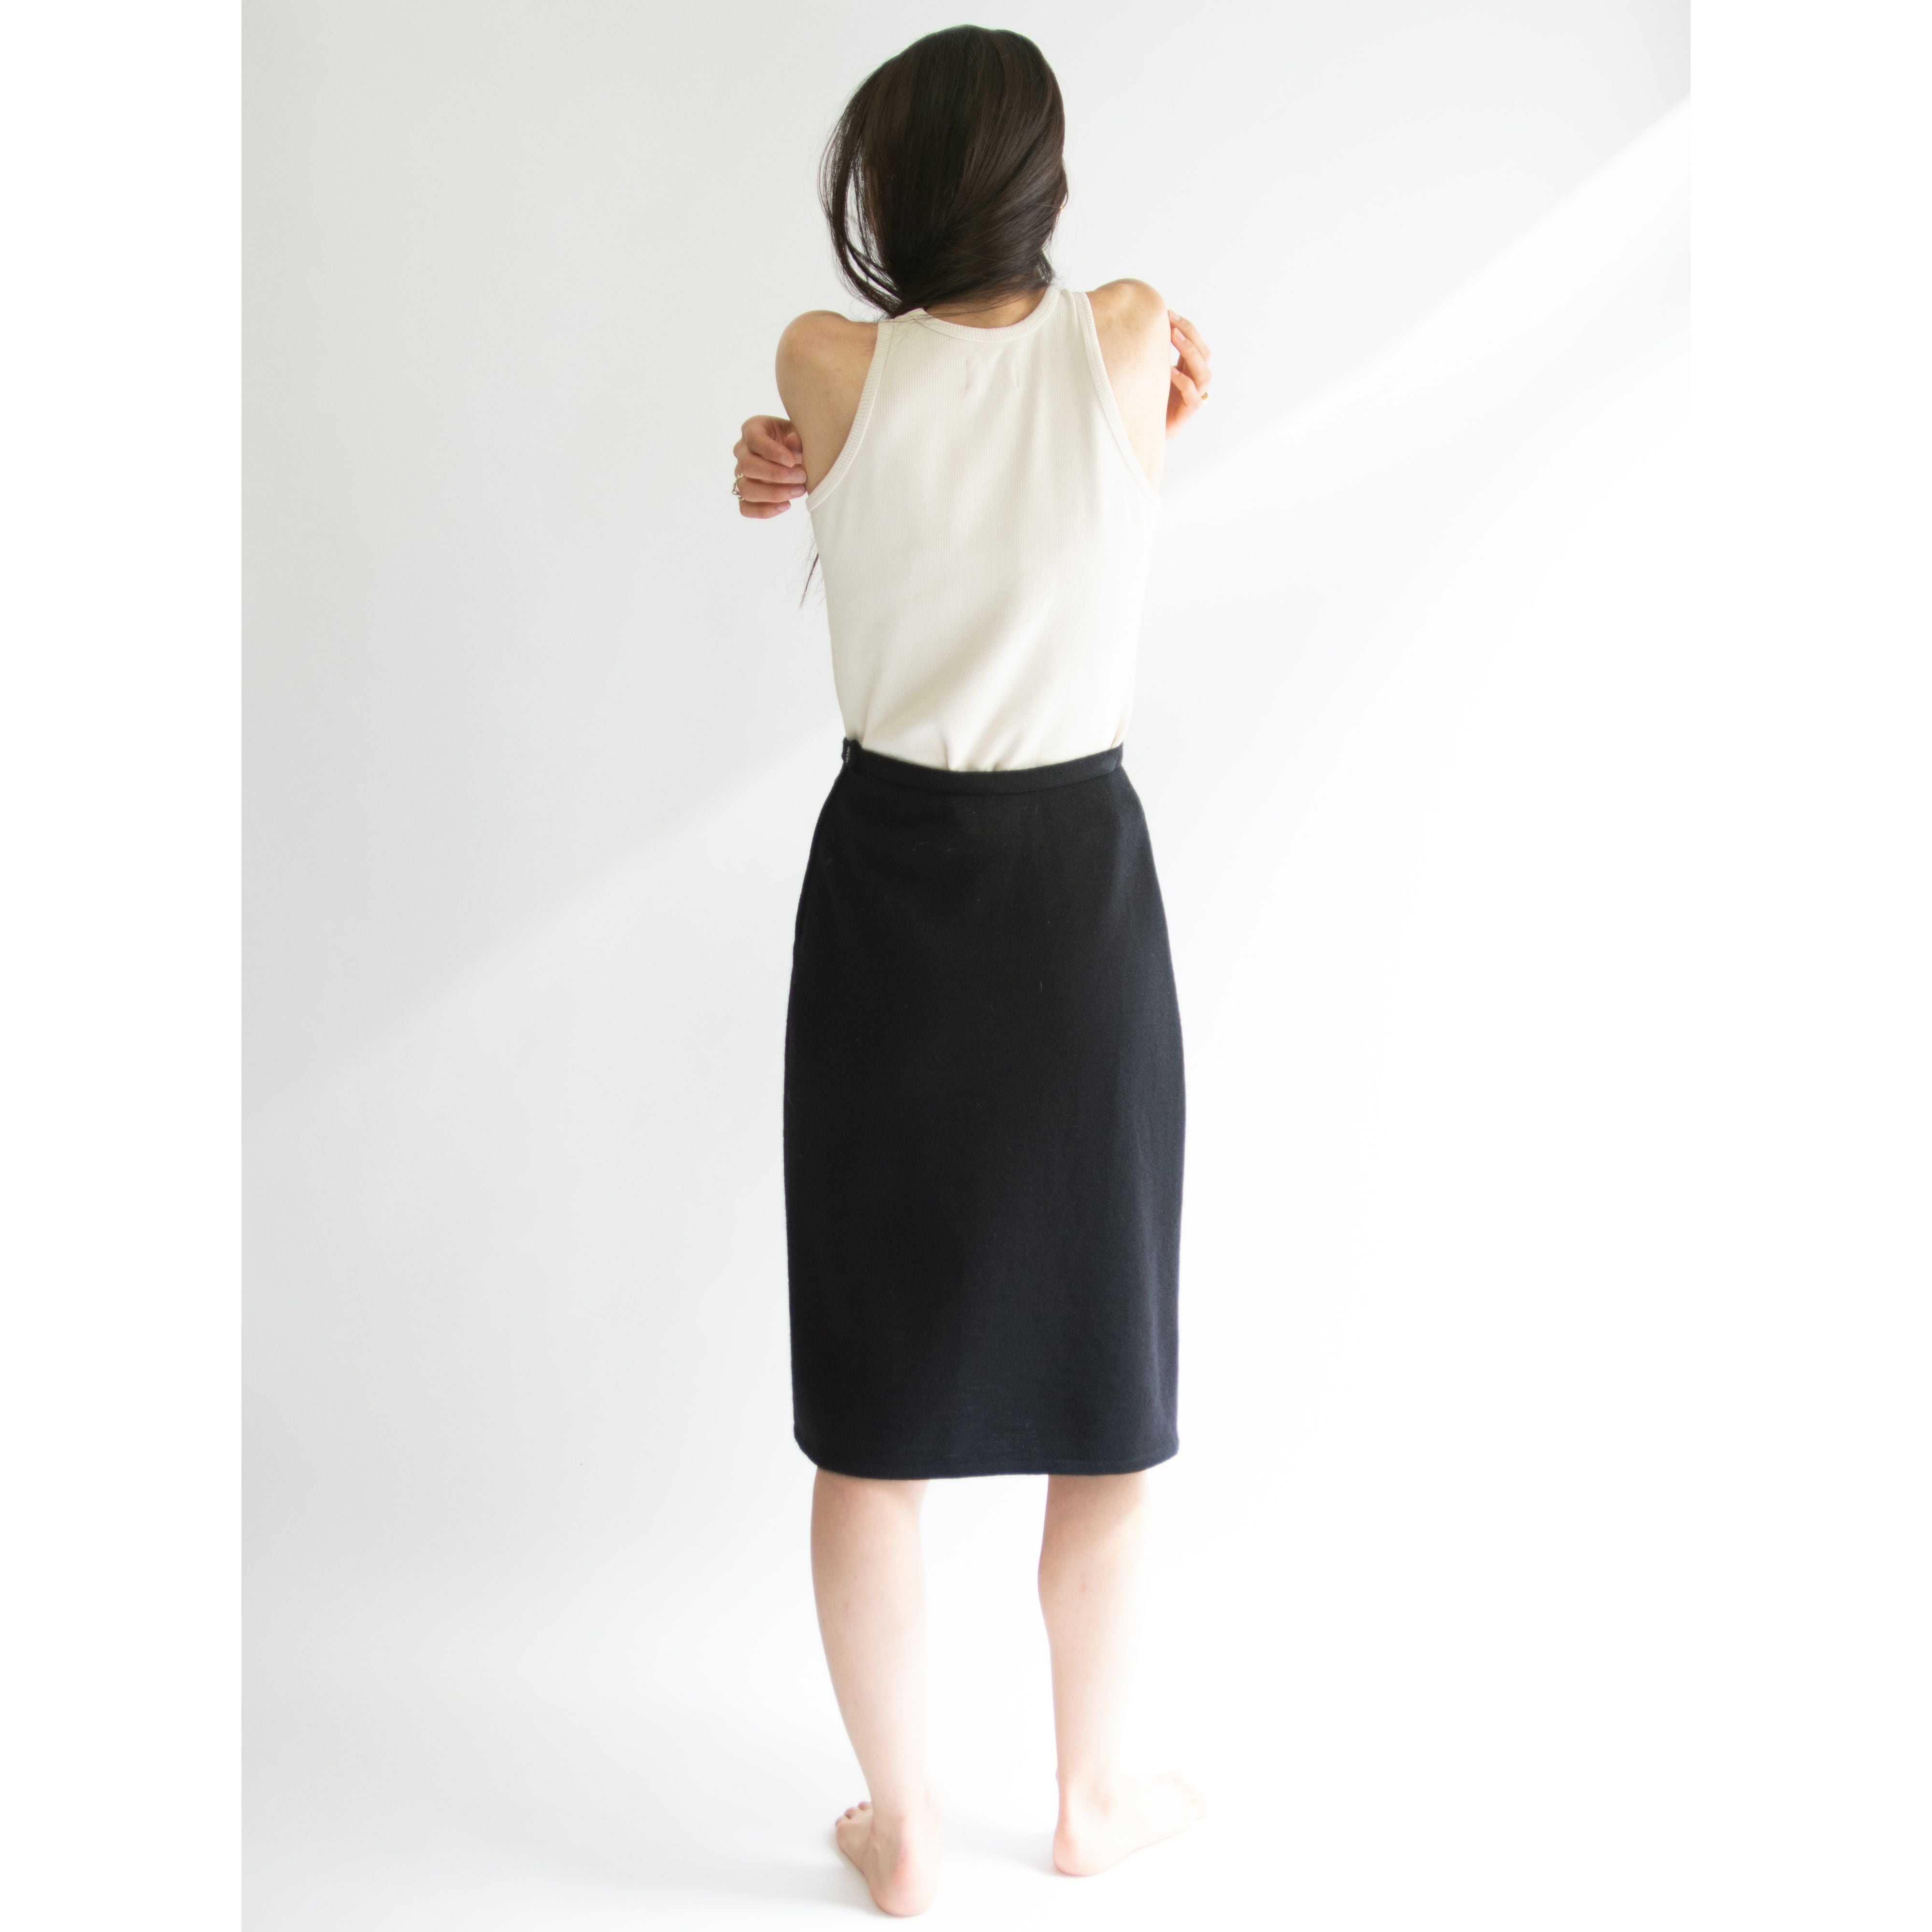 【SONIA RYKIEL】Made in France 70-80's 100% Wool Jersey Skirt（ソニアリキエル フランス製ウールジャージースカート）